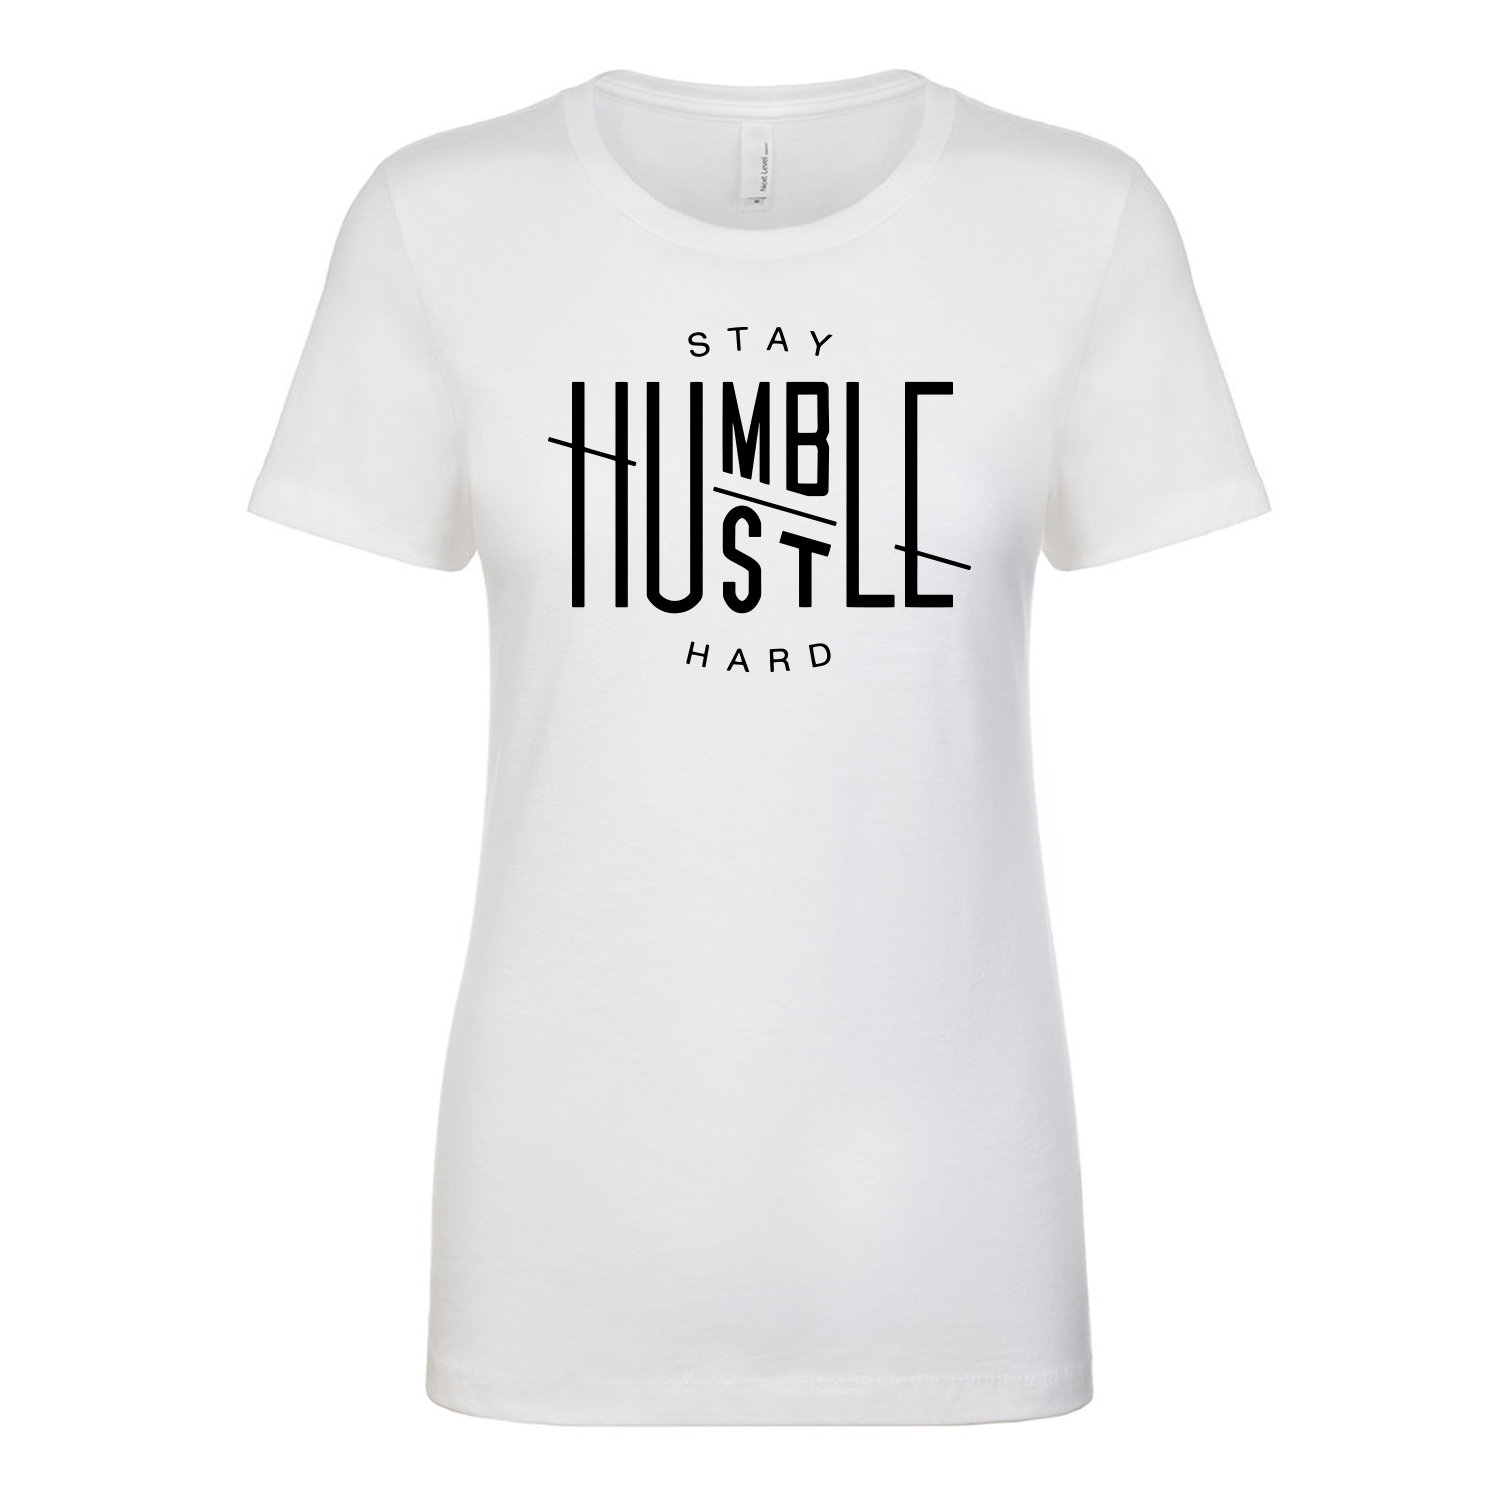 Stay Humble Hustle Hard tees